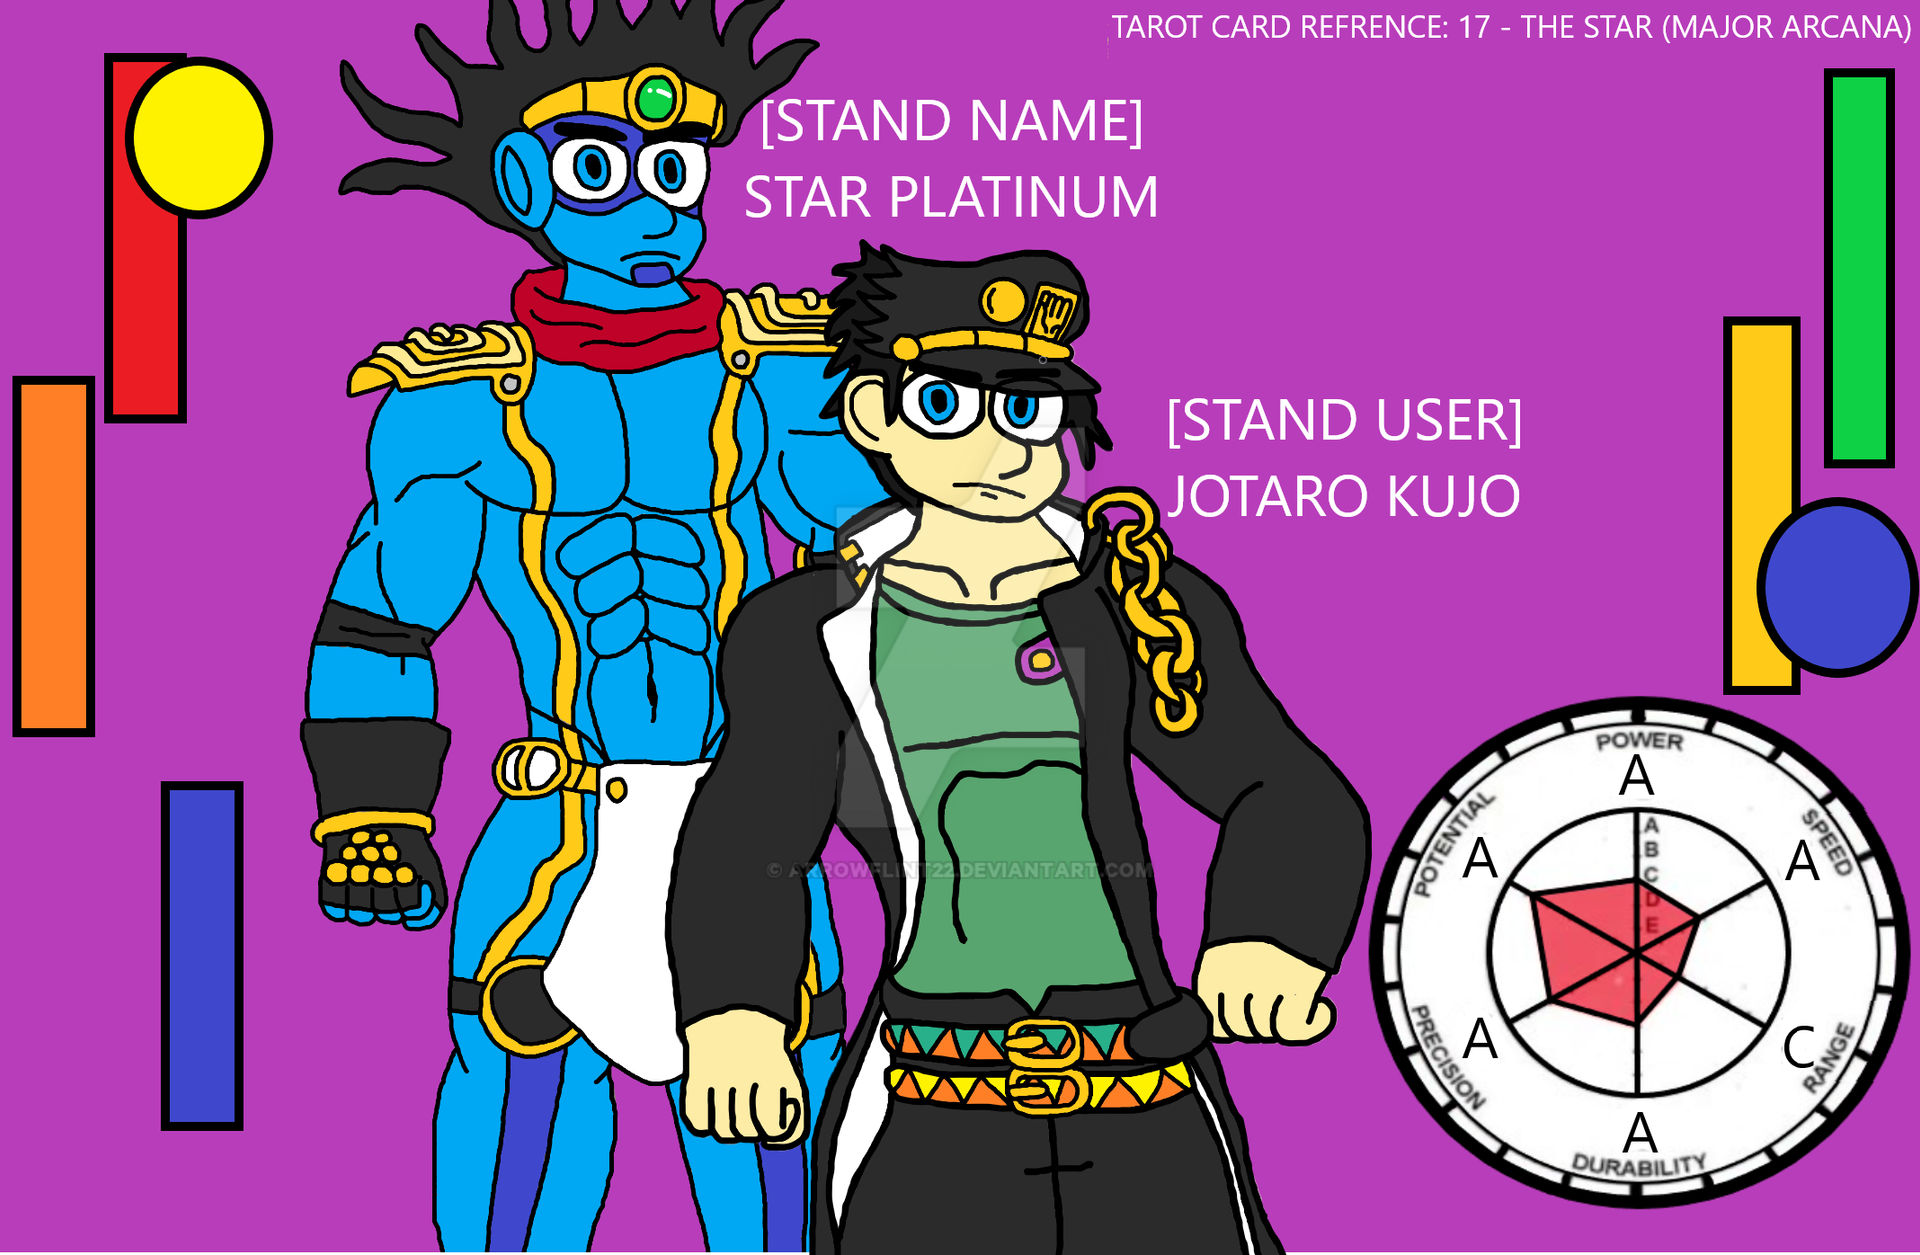 STAND NAME] Star Platinum [STAND USER]Jotaro Kujo by ArrowFlint22